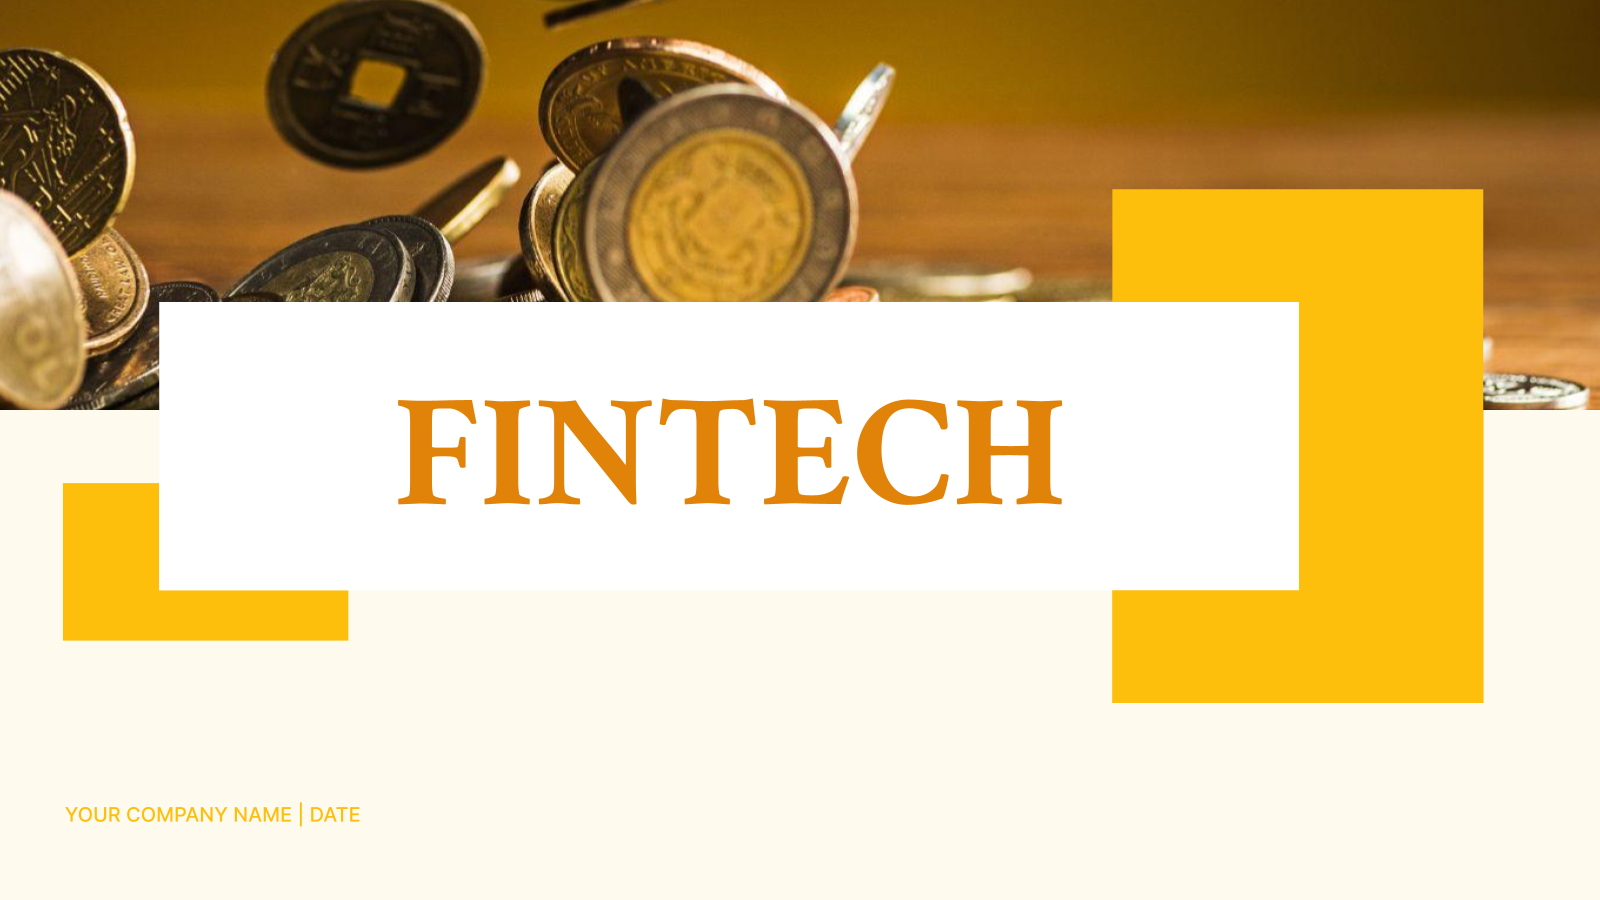 Fintech Pitch Deck: Investor & Startup Presentation Template